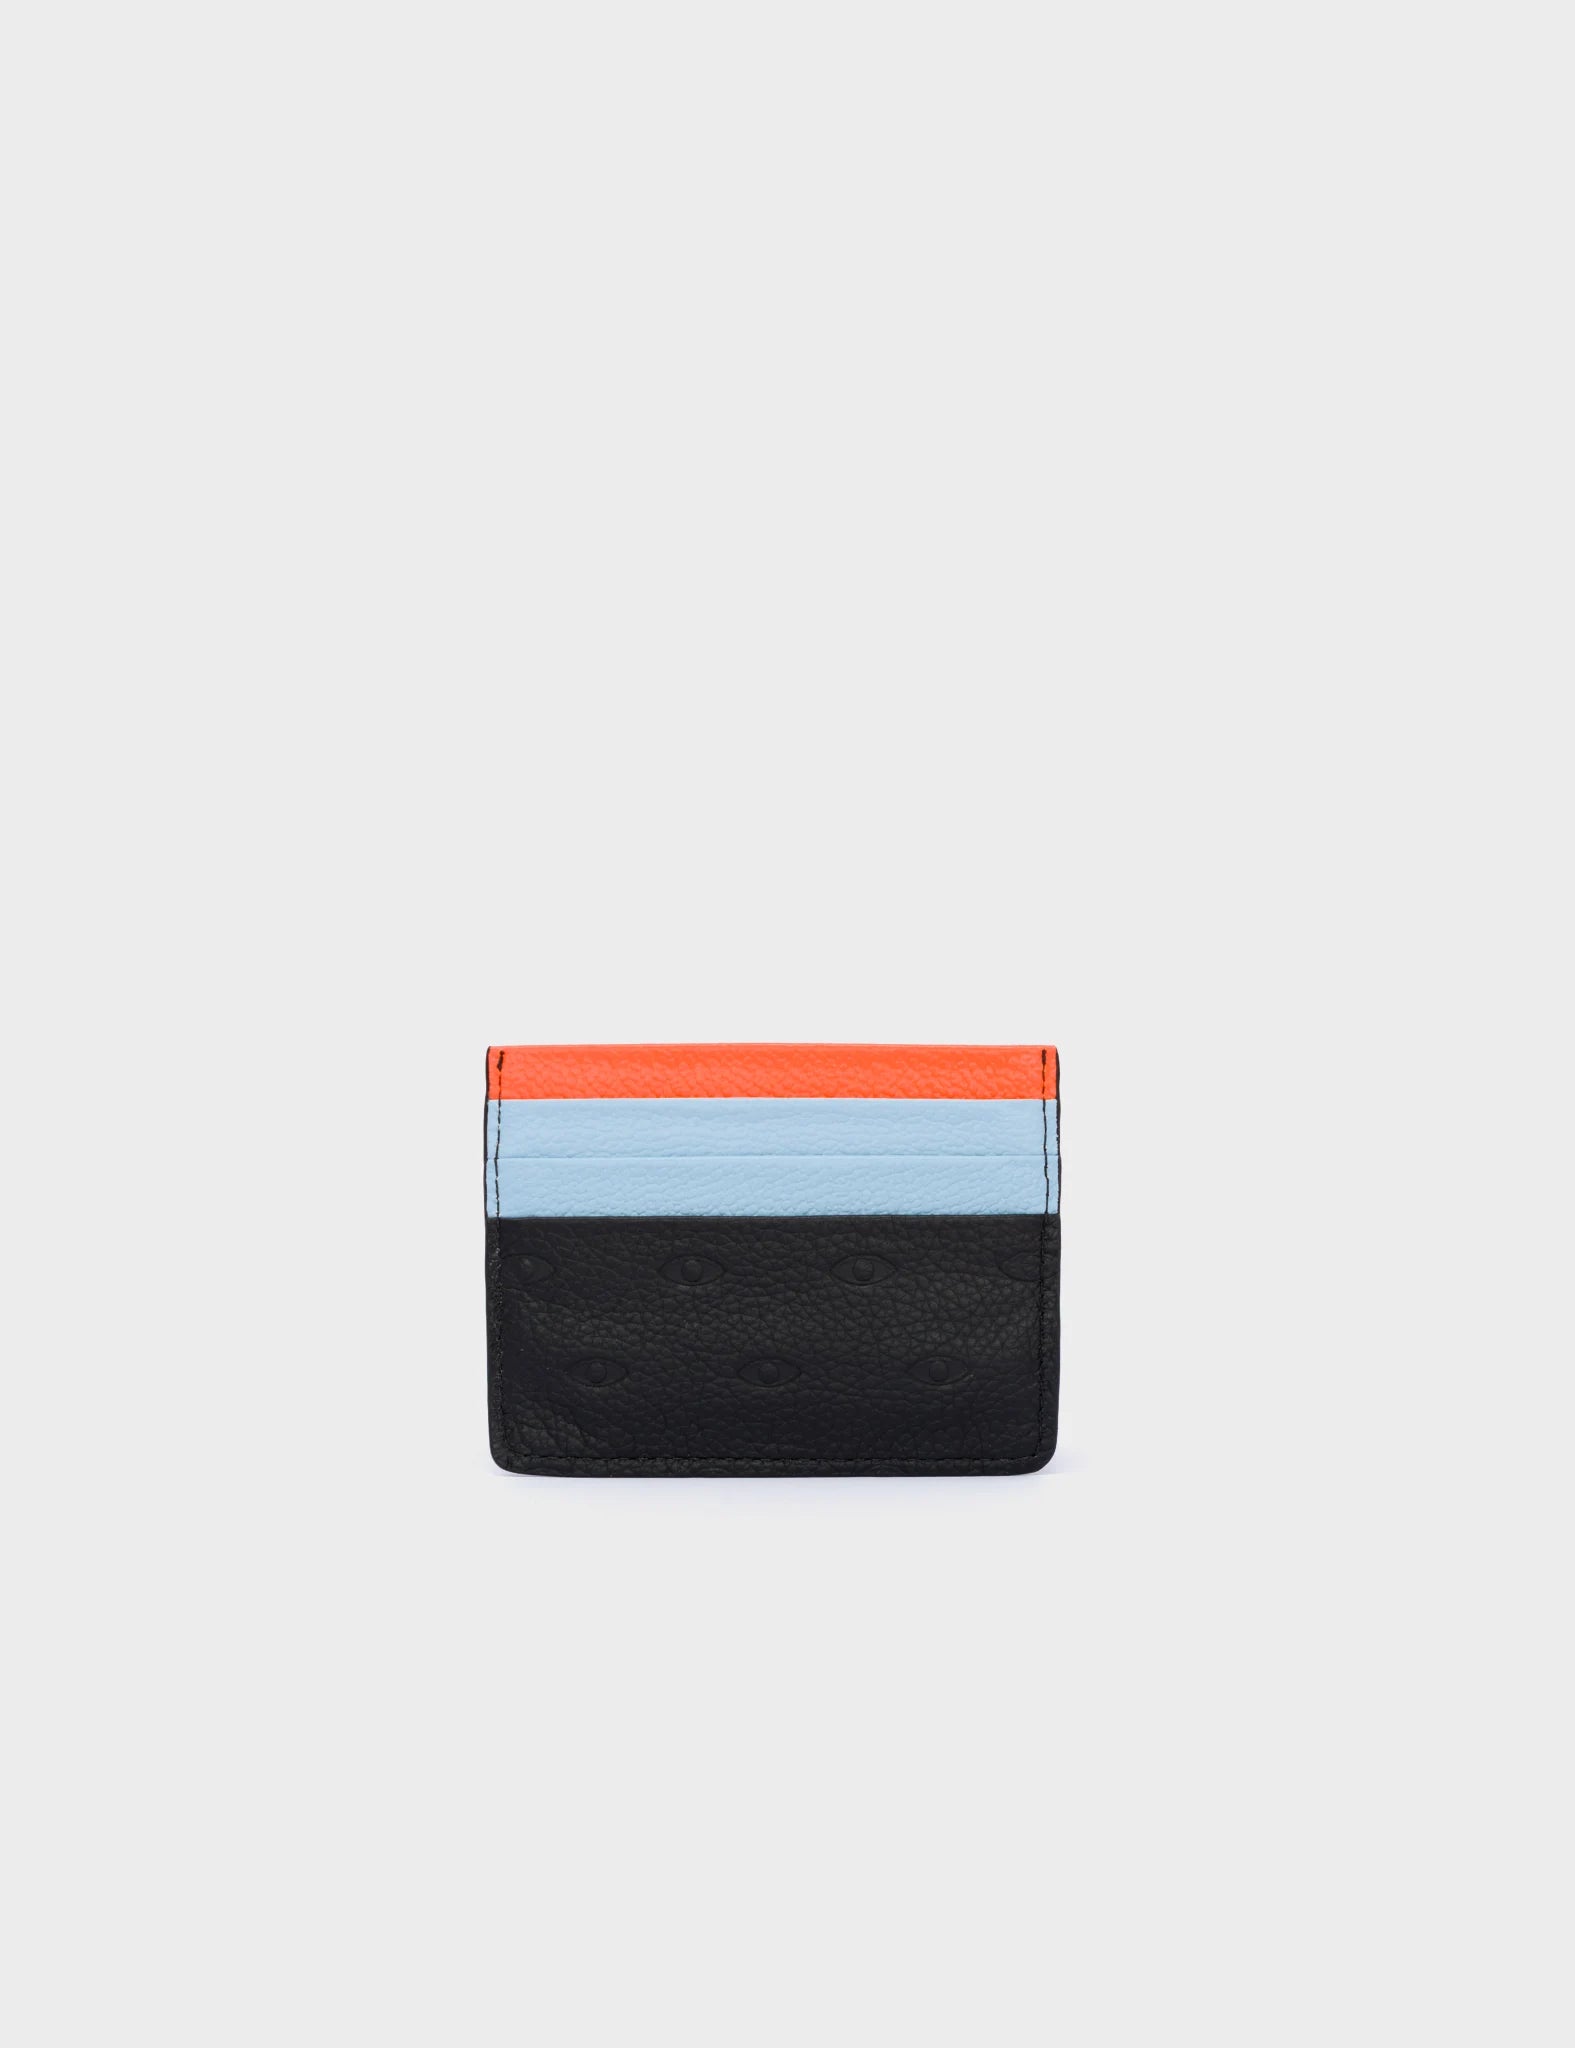 Filium Wallet Black And Neon Orange Leather Cardholder - Eyes Pattern Debossed - Back 